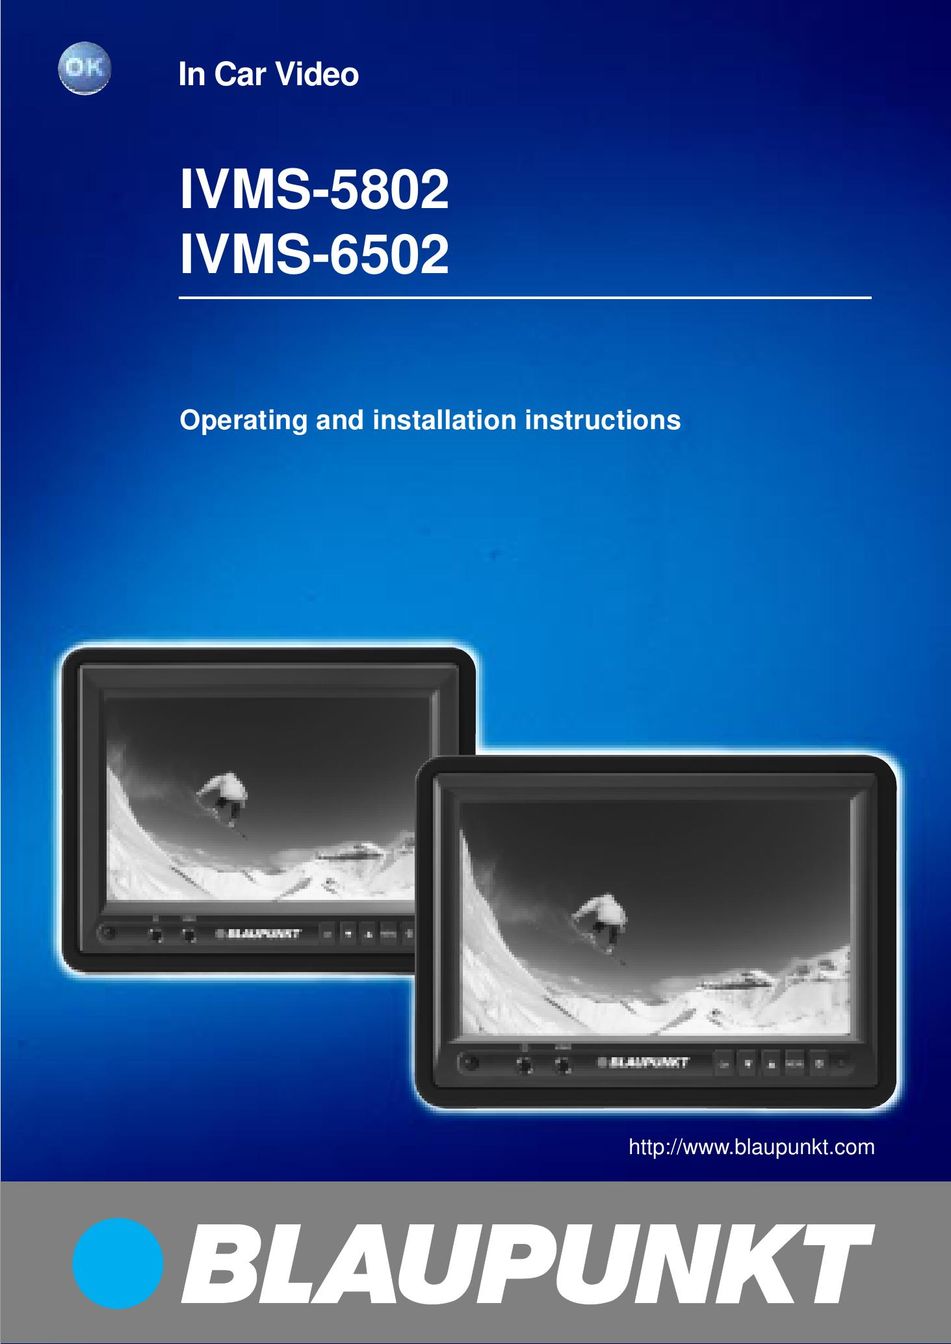 Blaupunkt IVMS-6502 Car Video System User Manual